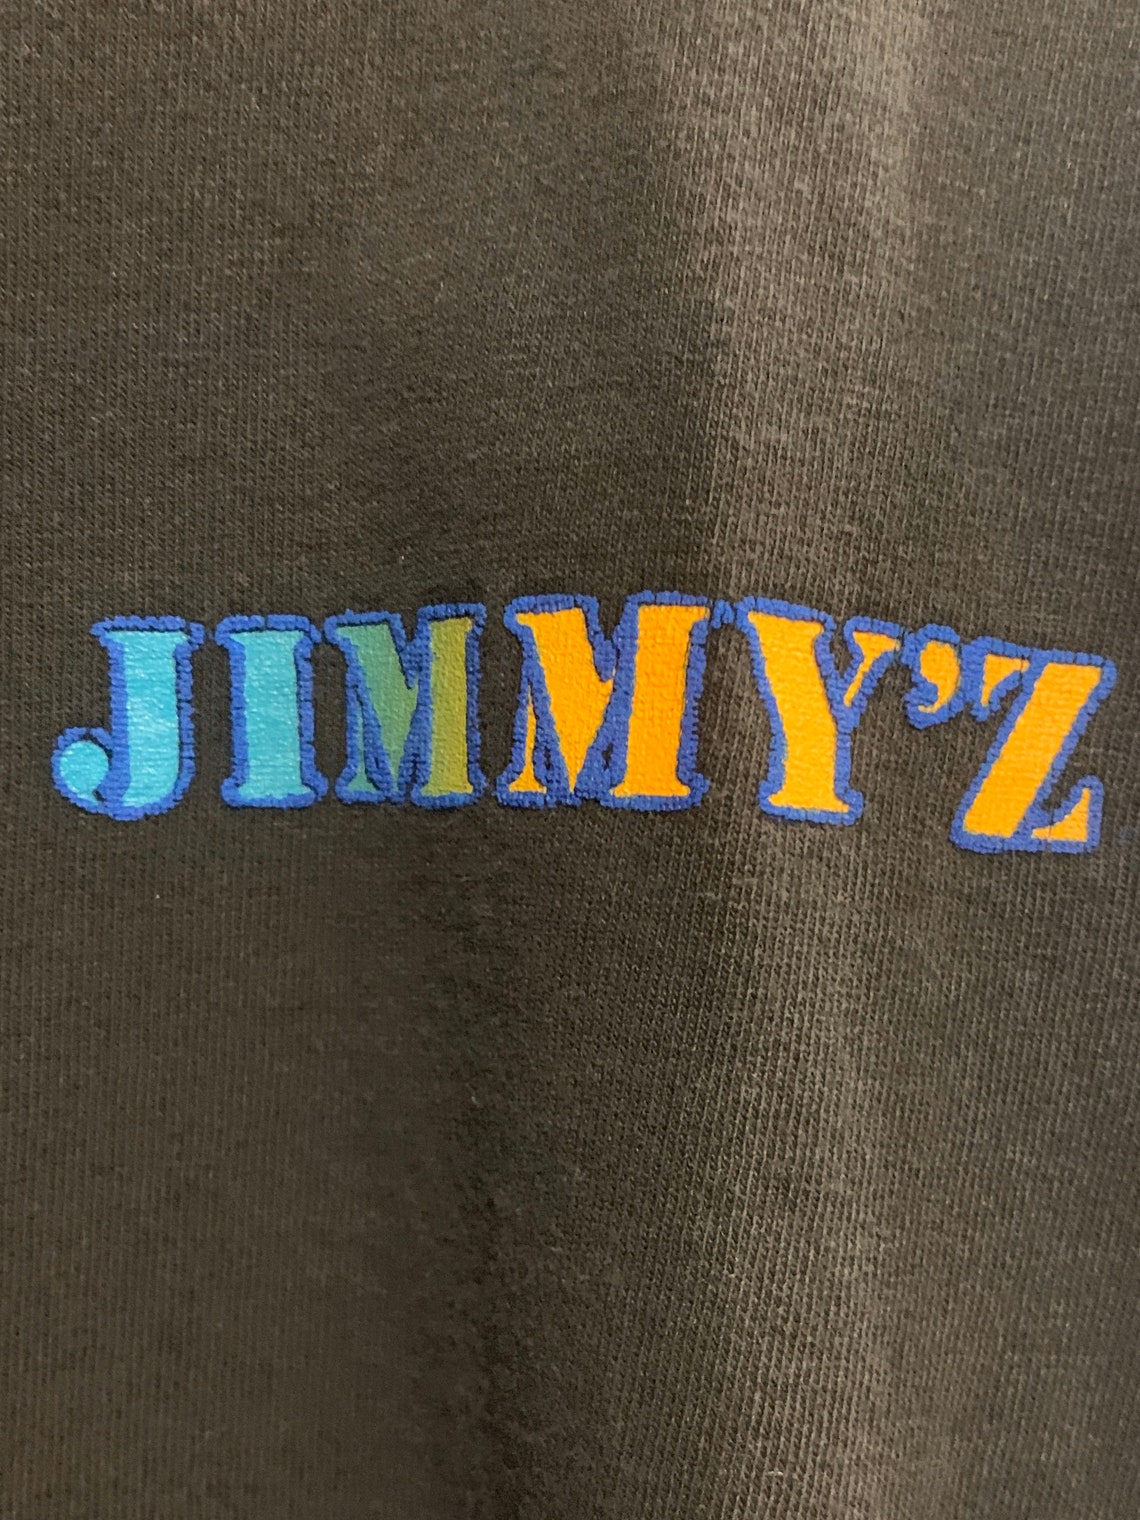 90 Jimmy Z Surf Co. Long Sleeve T-Shirt Sz. L | Etsy